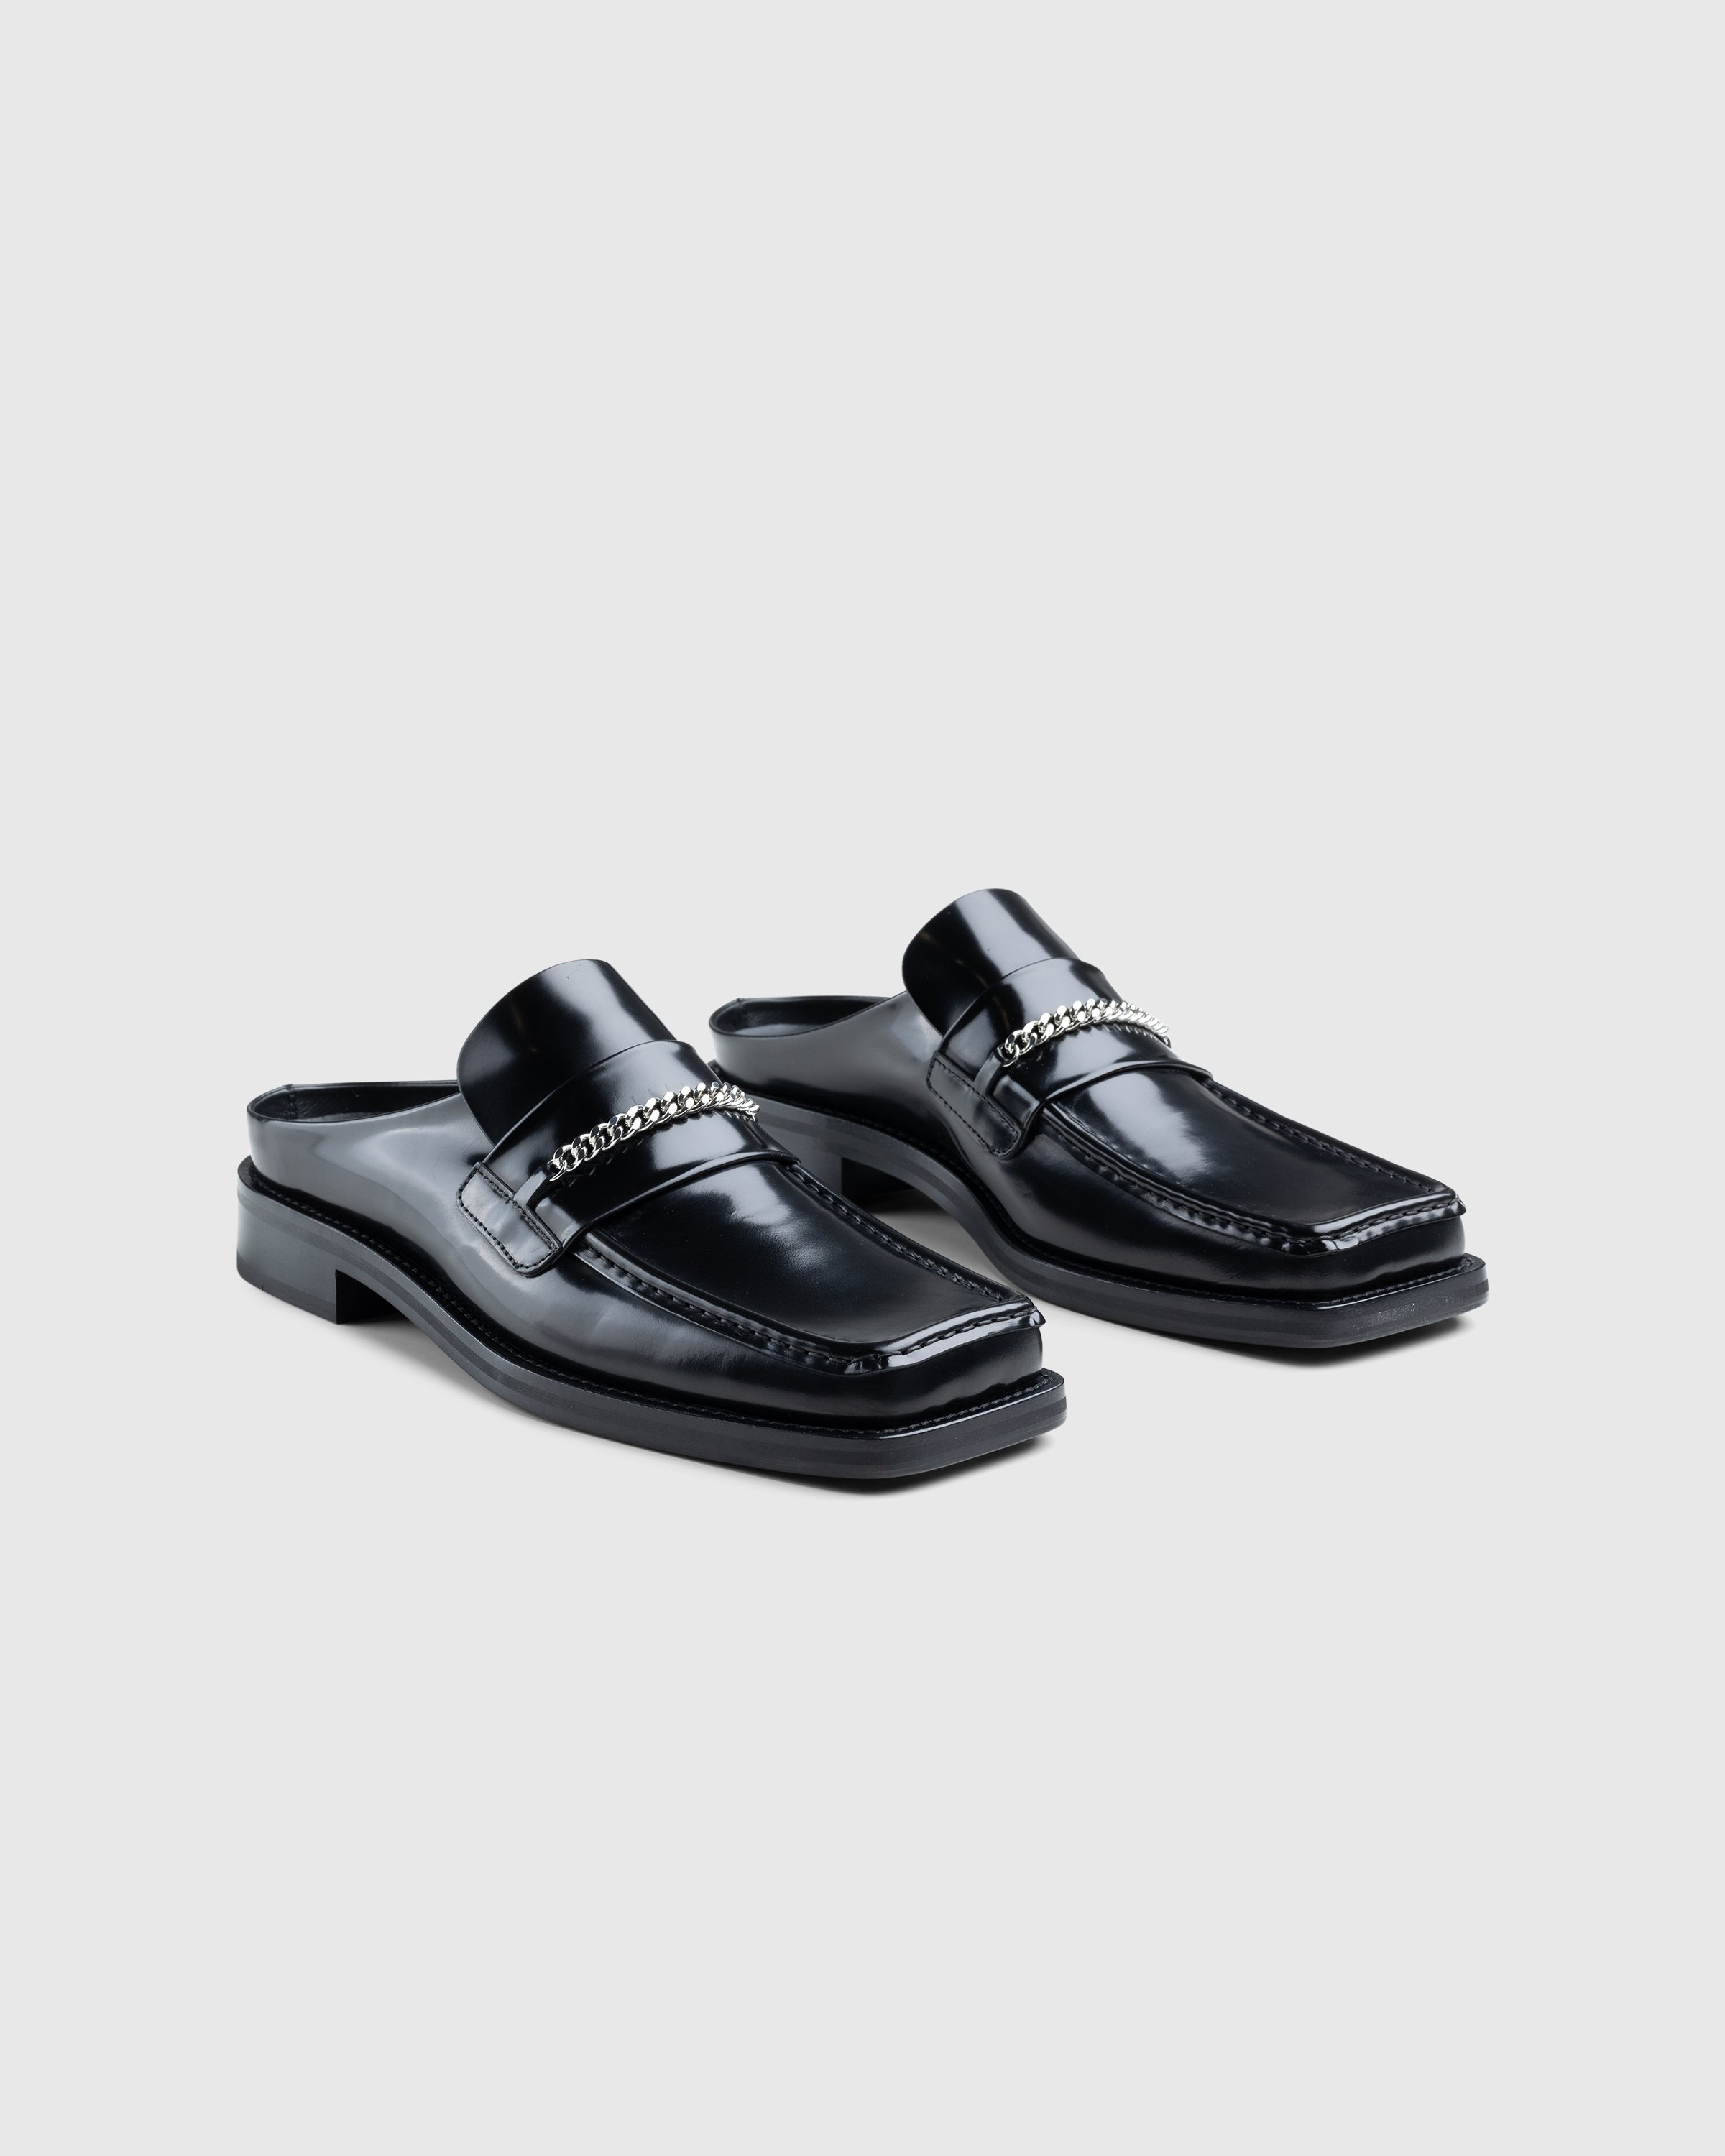 Martine Rose - Square Toe Mule High Shine Black - Footwear - Black - Image 3